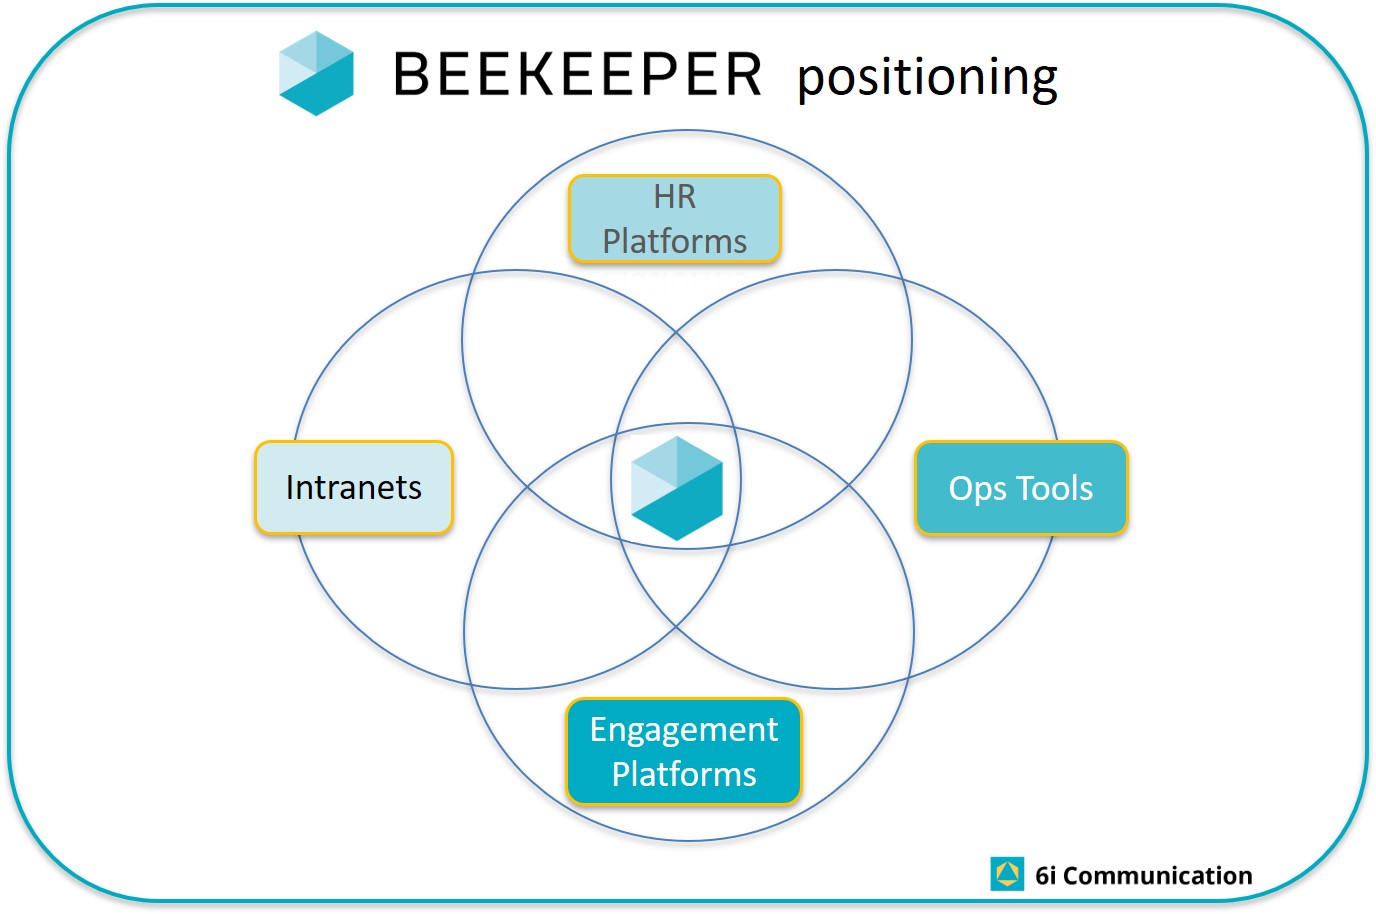 Beekeeper positioning among other WorkTech